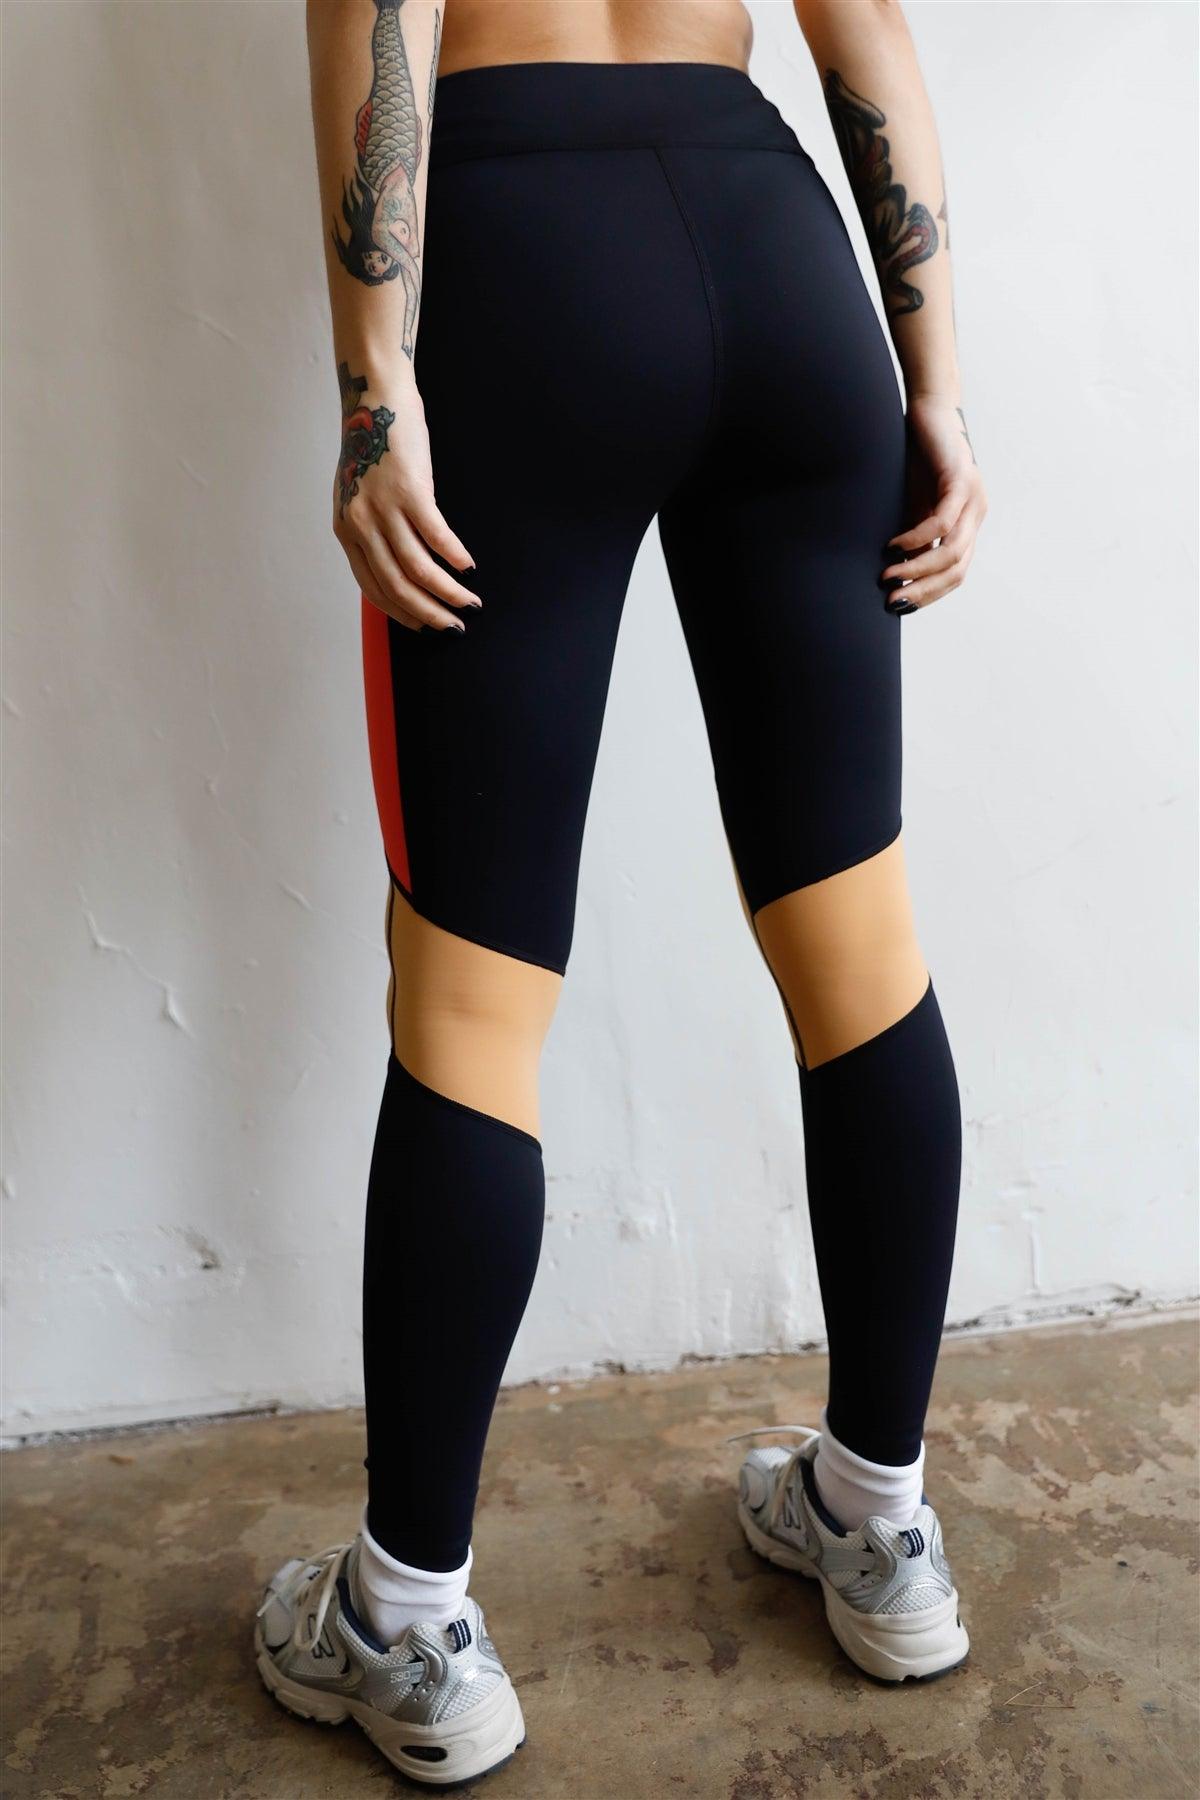 Black Multi Colorblock High Waist Legging Sport Activewear Pants /2-3-1